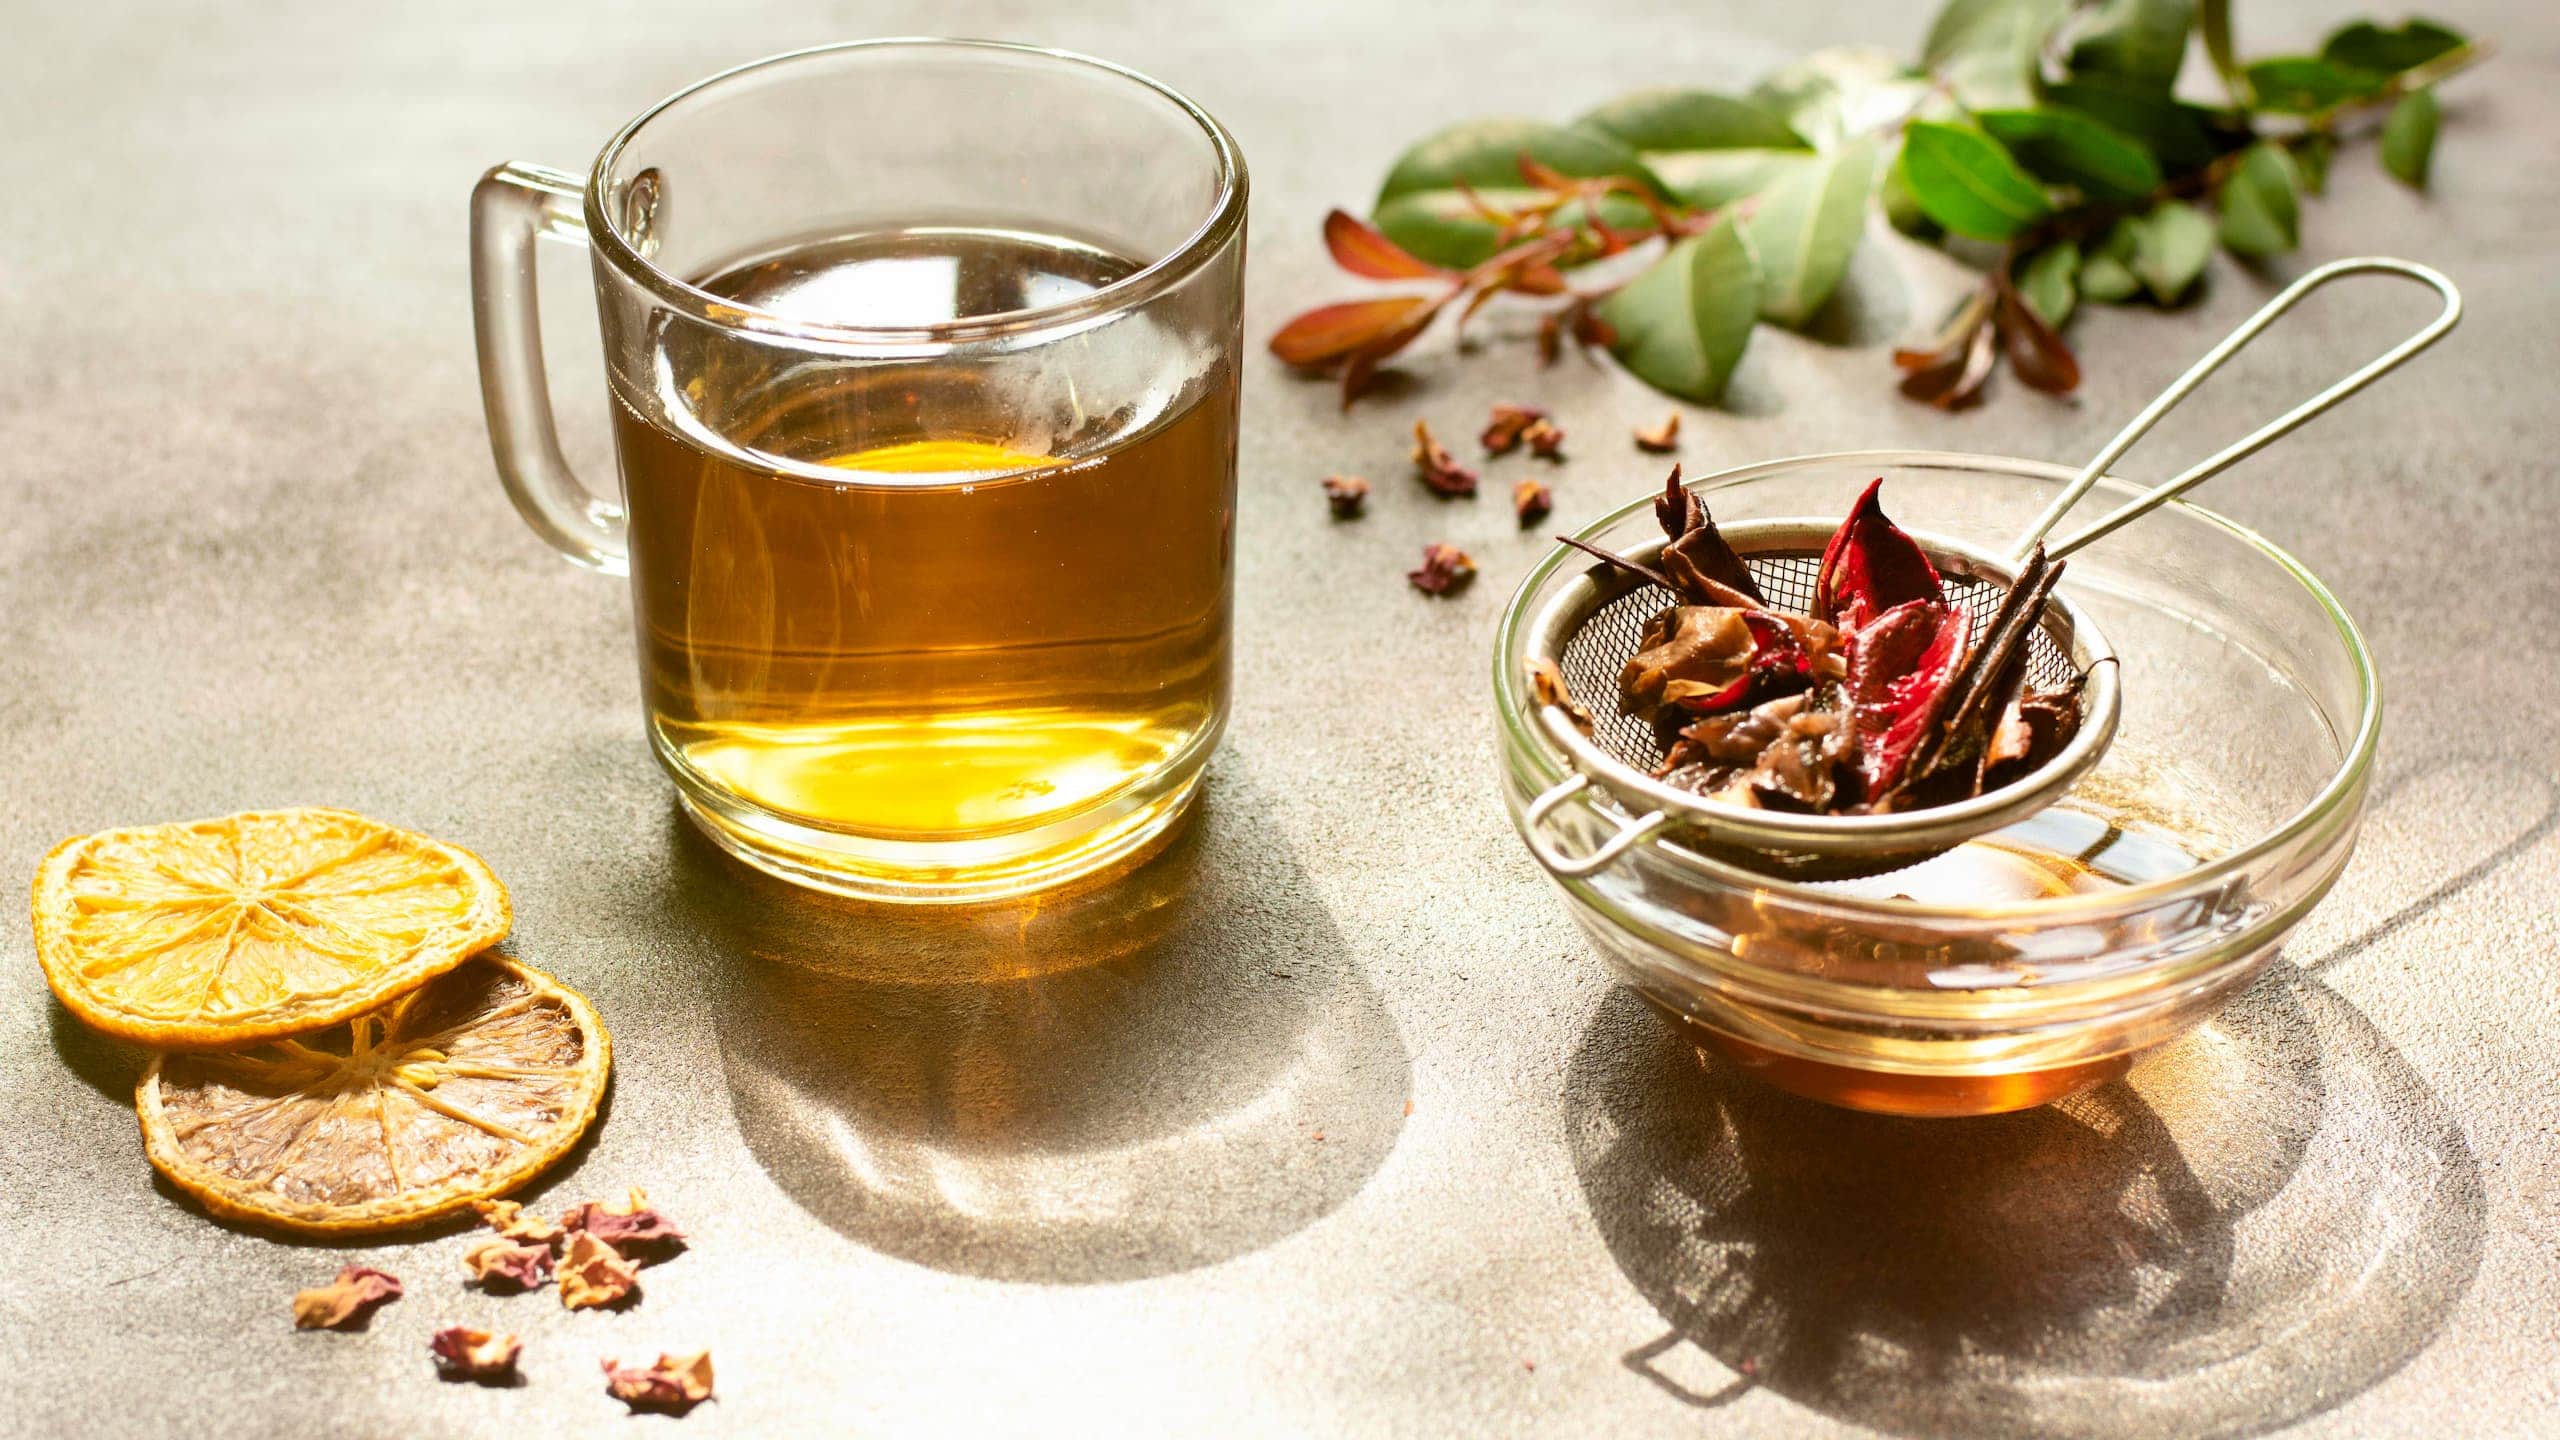 Herbalife tea winter drink with dried lemon and herbs